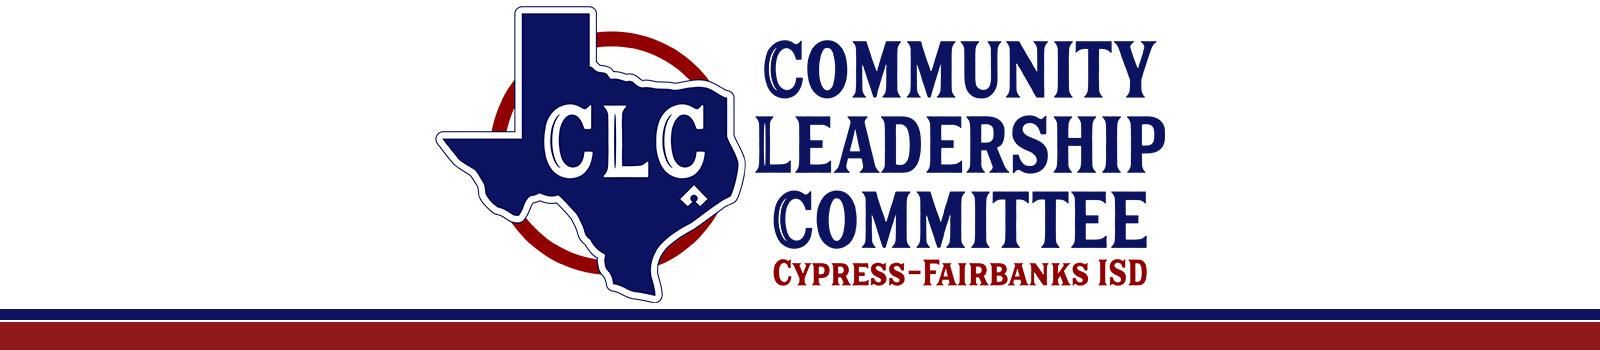 CLC - Community Leadership Committee CFISD